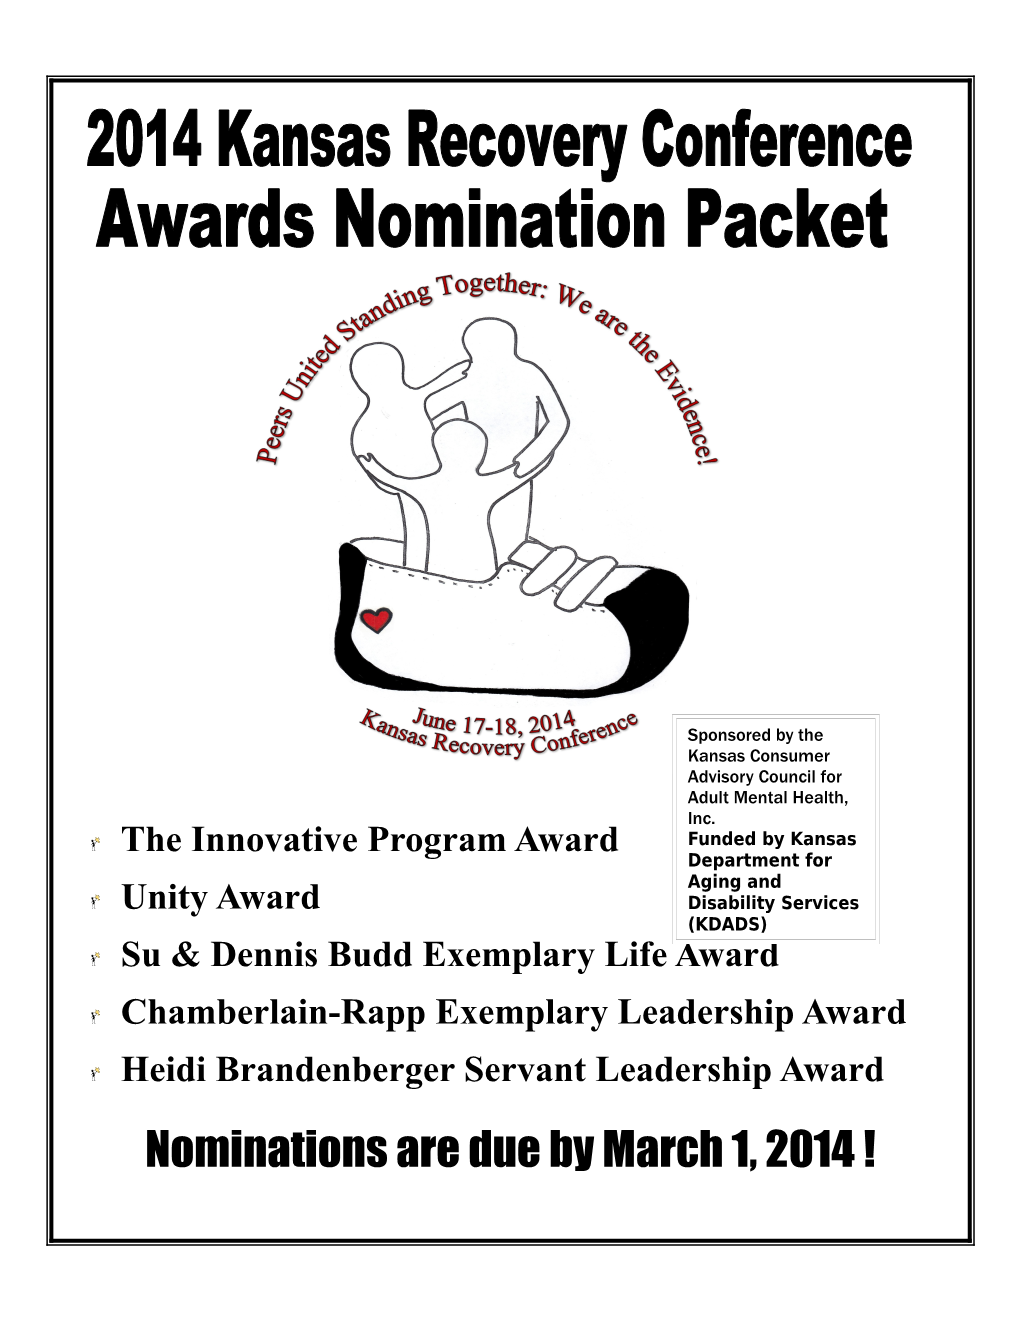 The Innovative Program Award